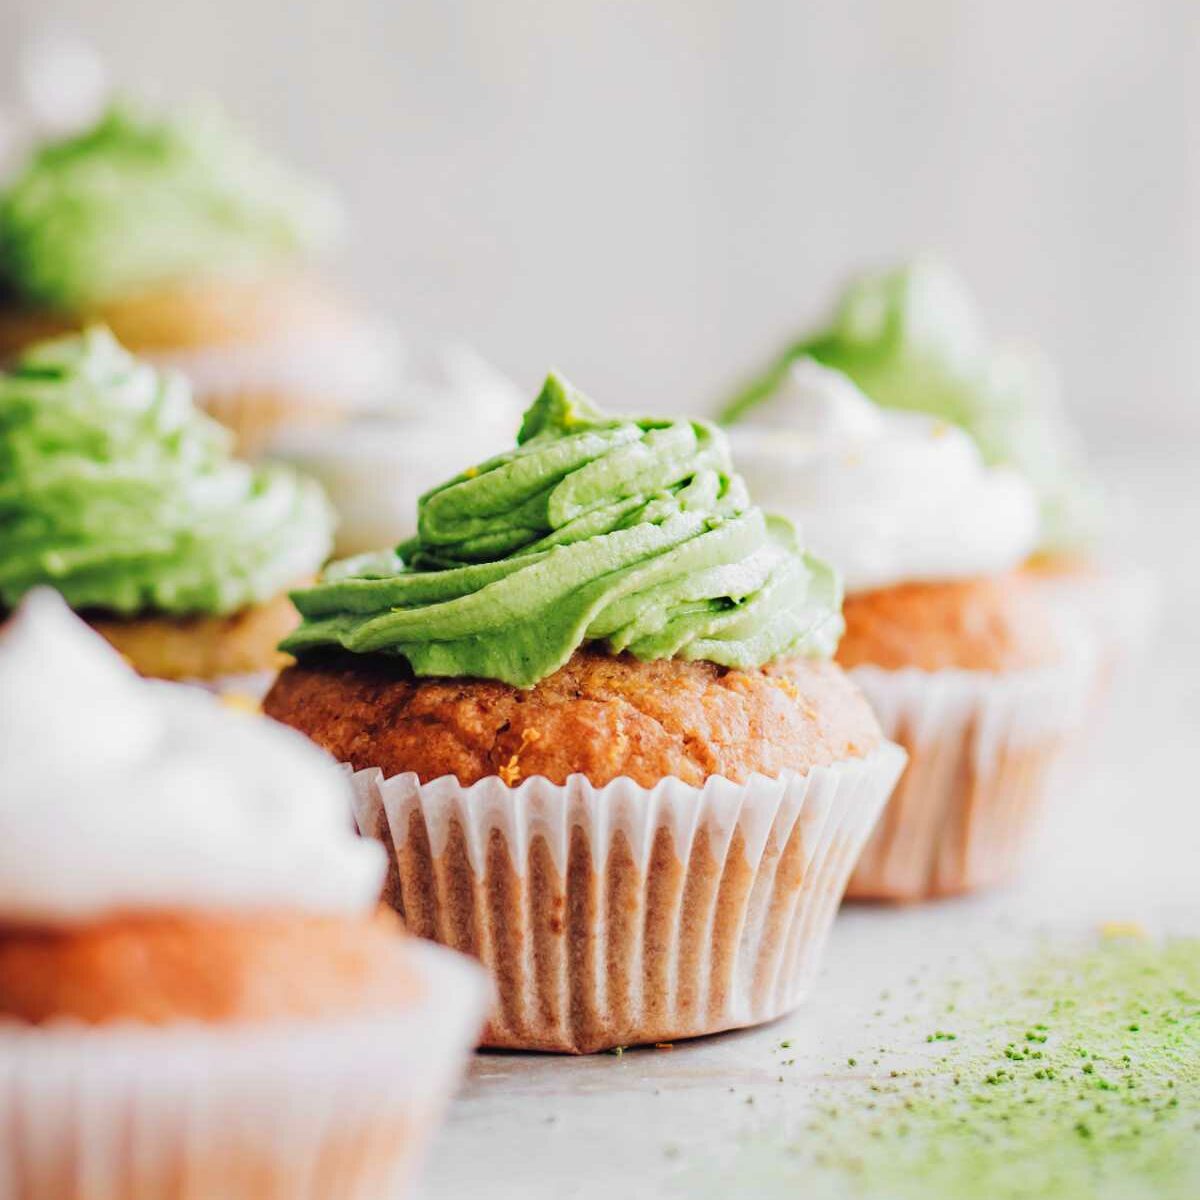 vegan matcha cupcakes and lemon cupcakes on a table